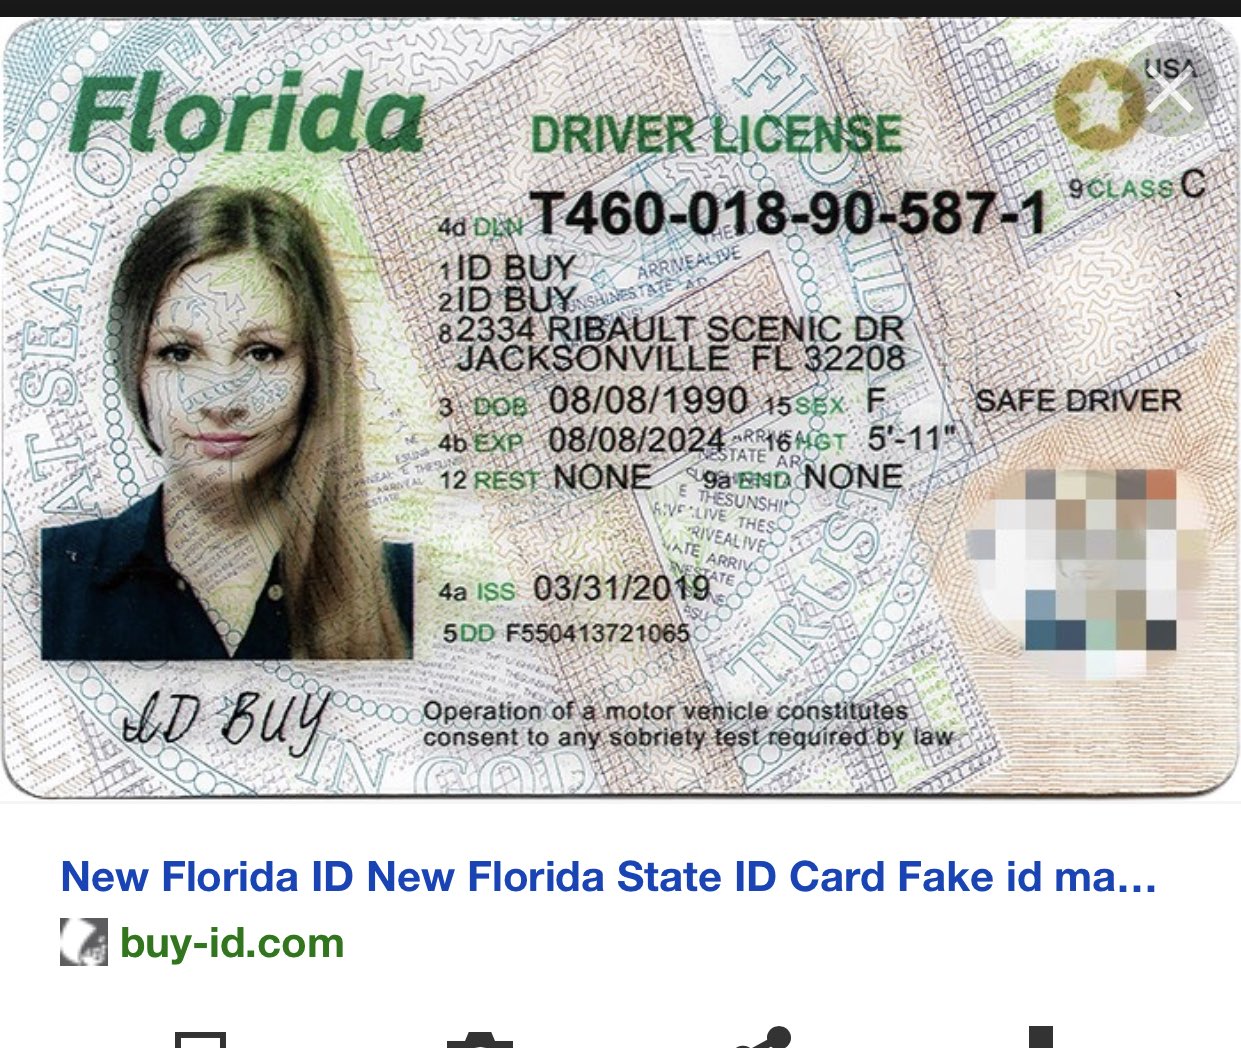 T license. Florida Driver License. Florida ID. USA ID Card Florida. American Driver License Florida.